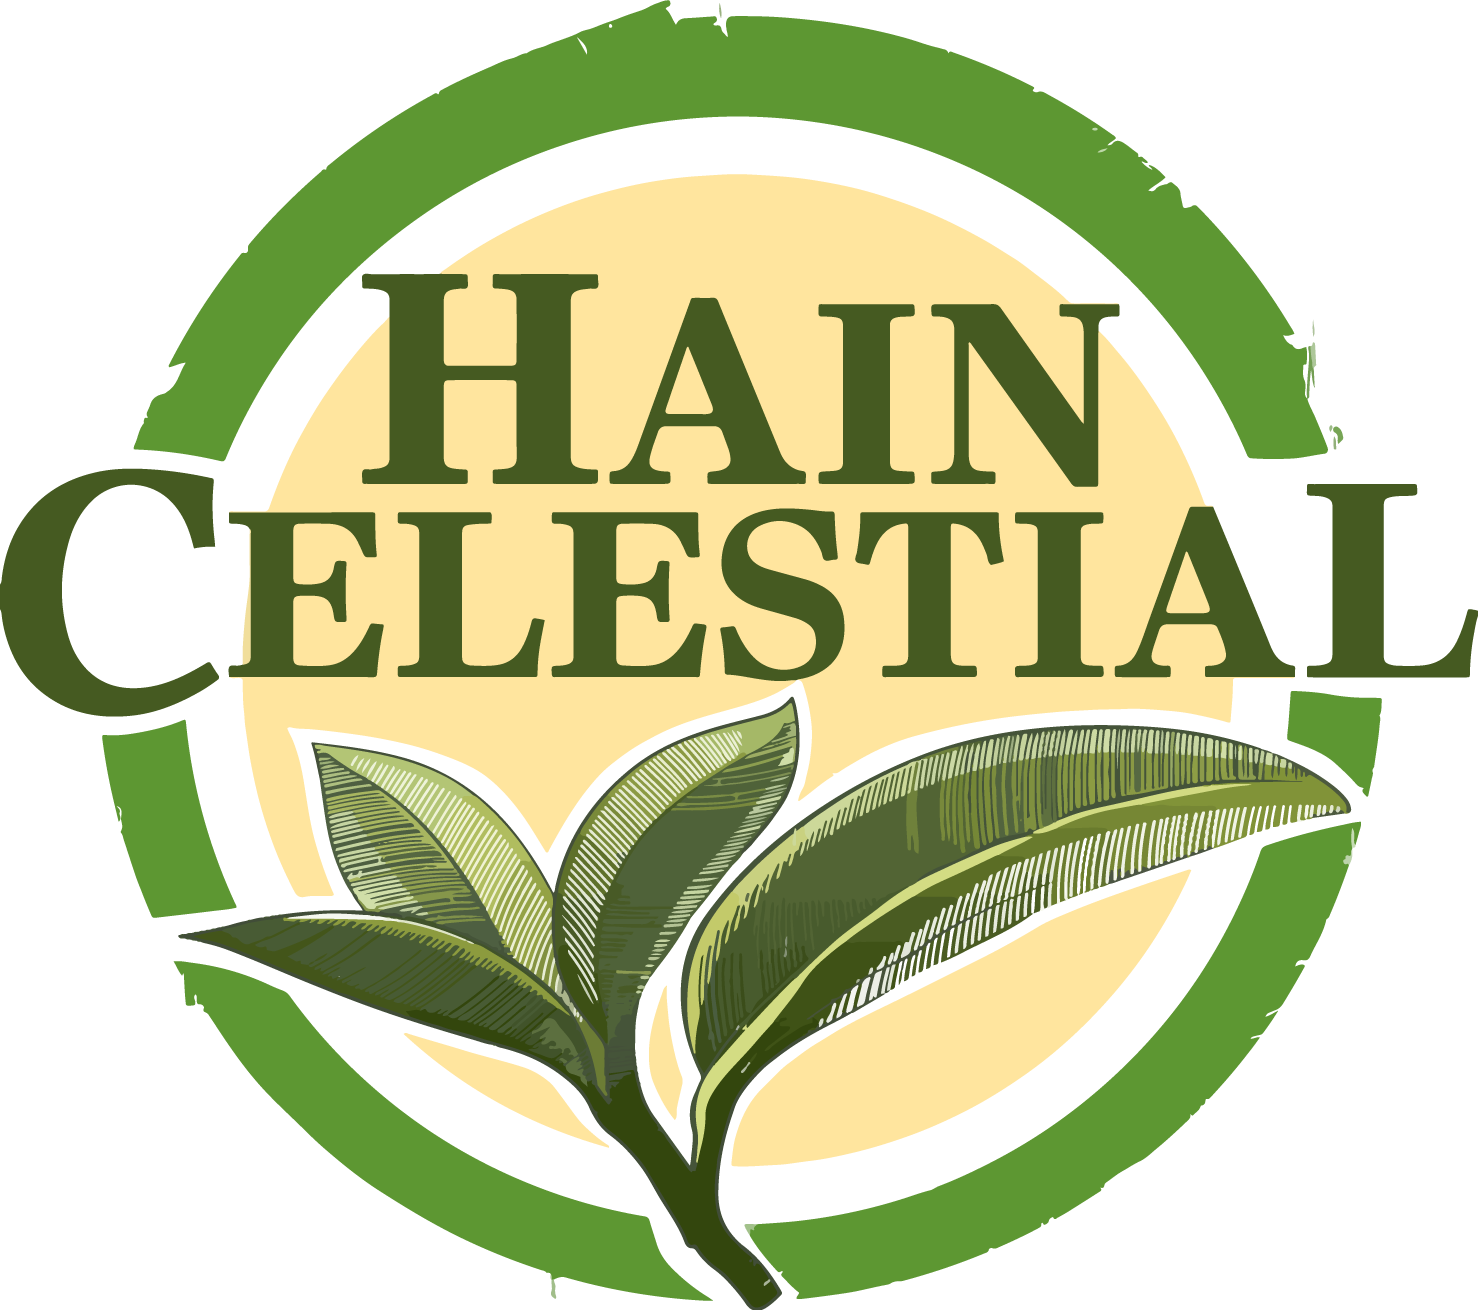 Hain Celestial logo large (transparent PNG)